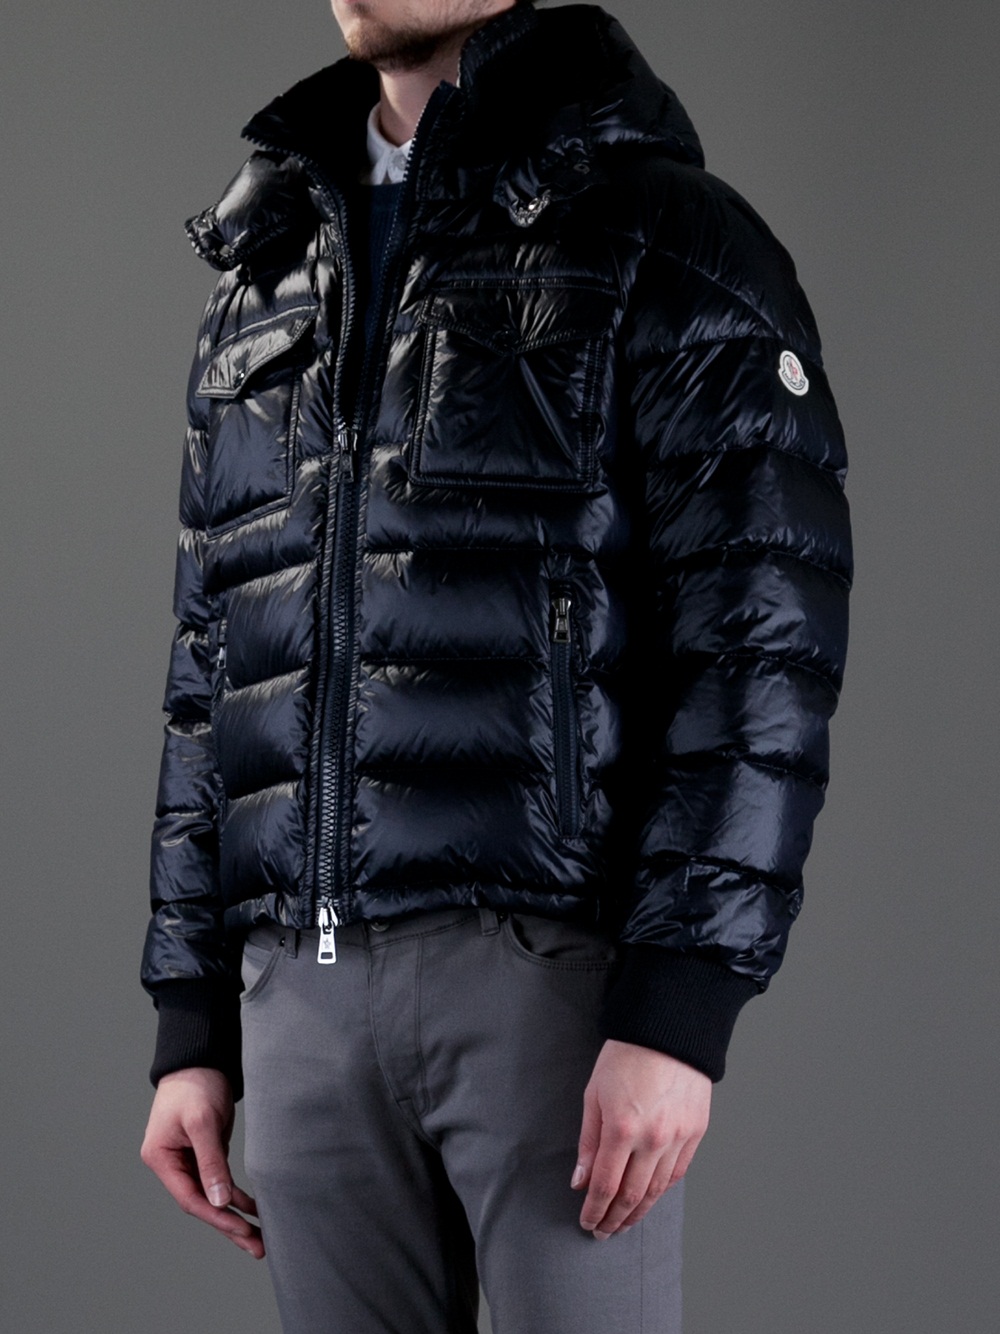 Moncler Fedor Padded Jacket in Navy (Black) for Men - Lyst